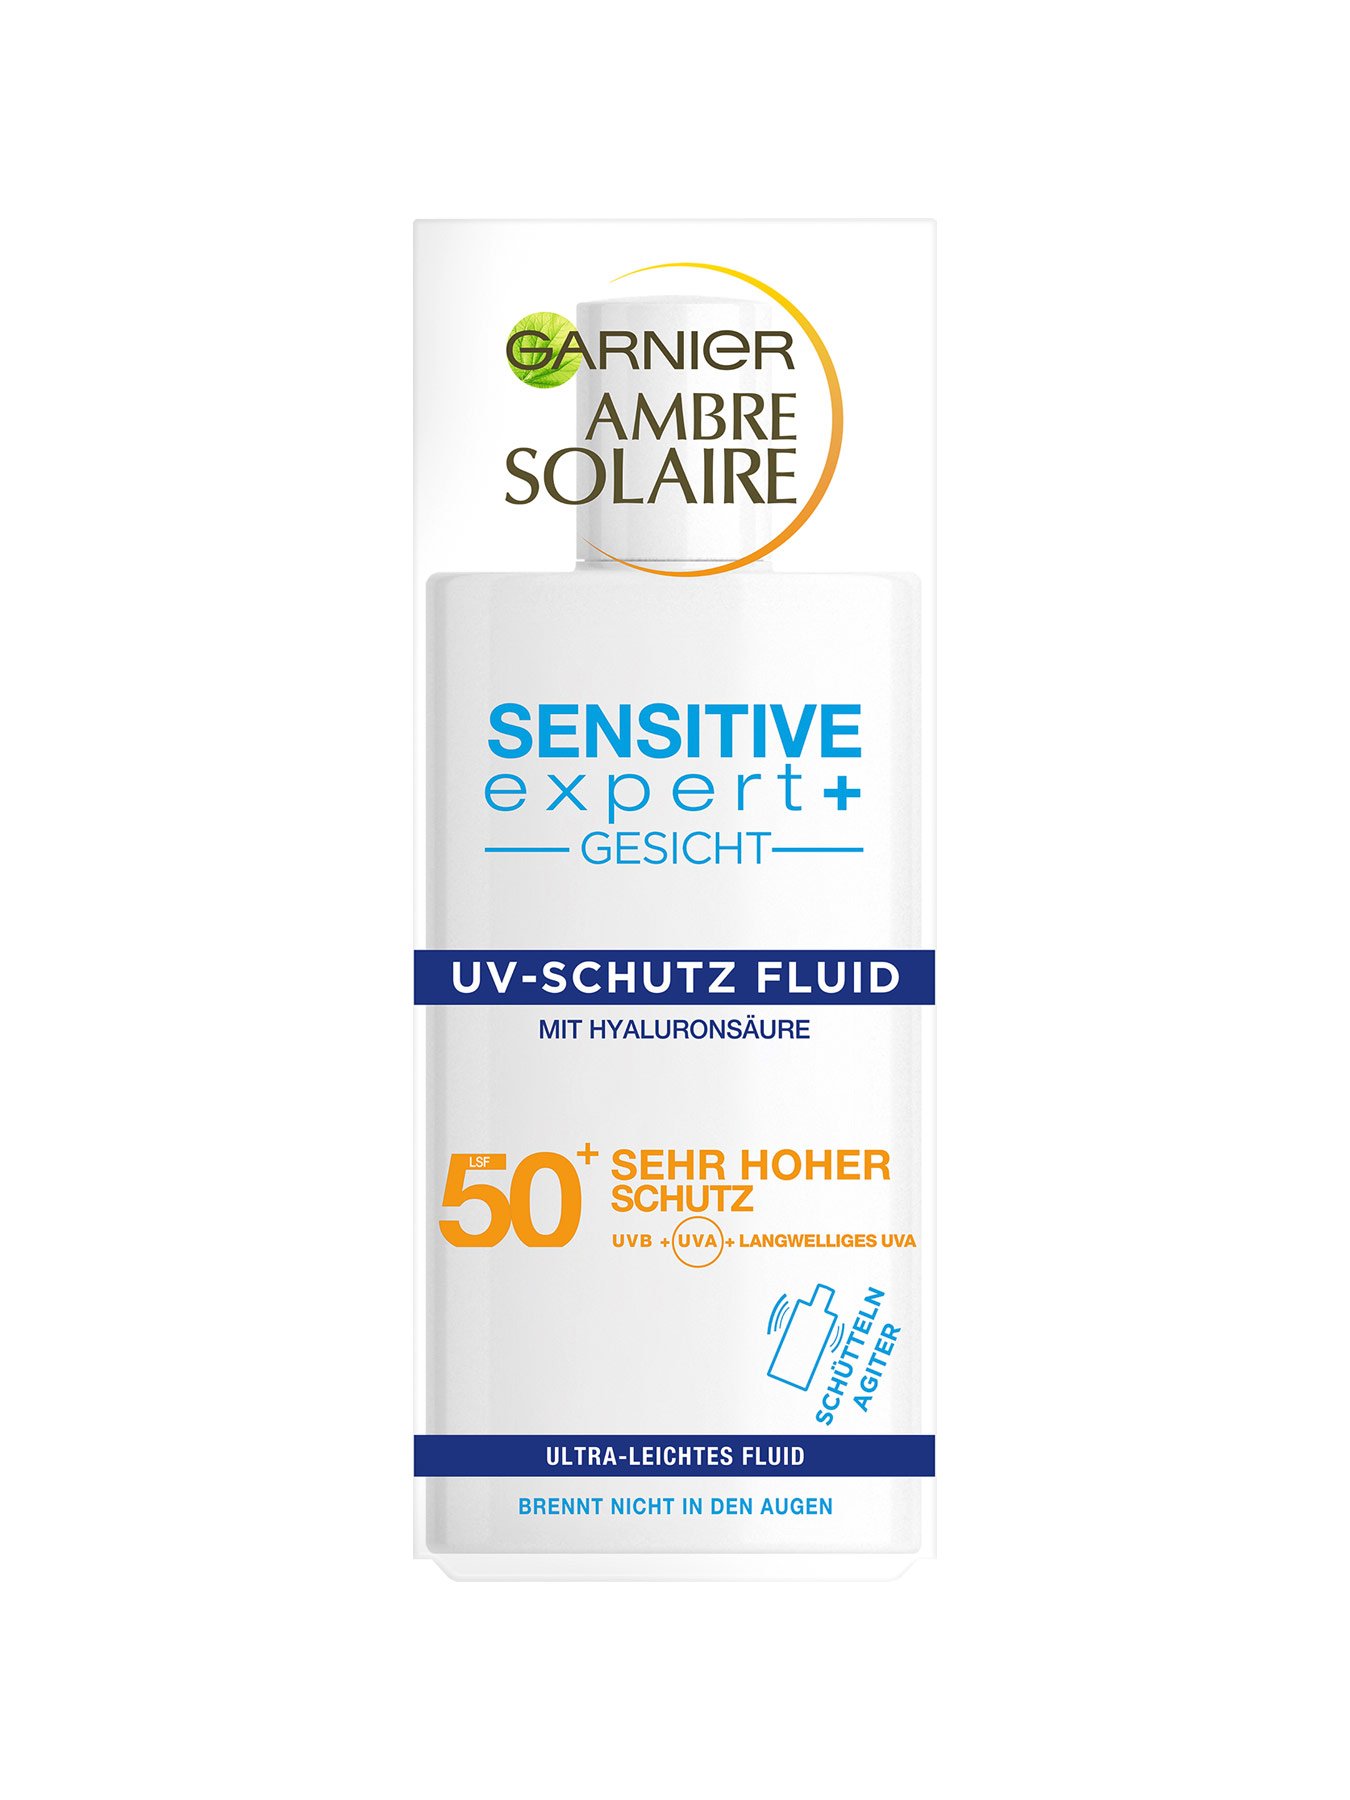 Ambre Solaire Sensitive expert+ Gesicht UV-Schutz Fluid 